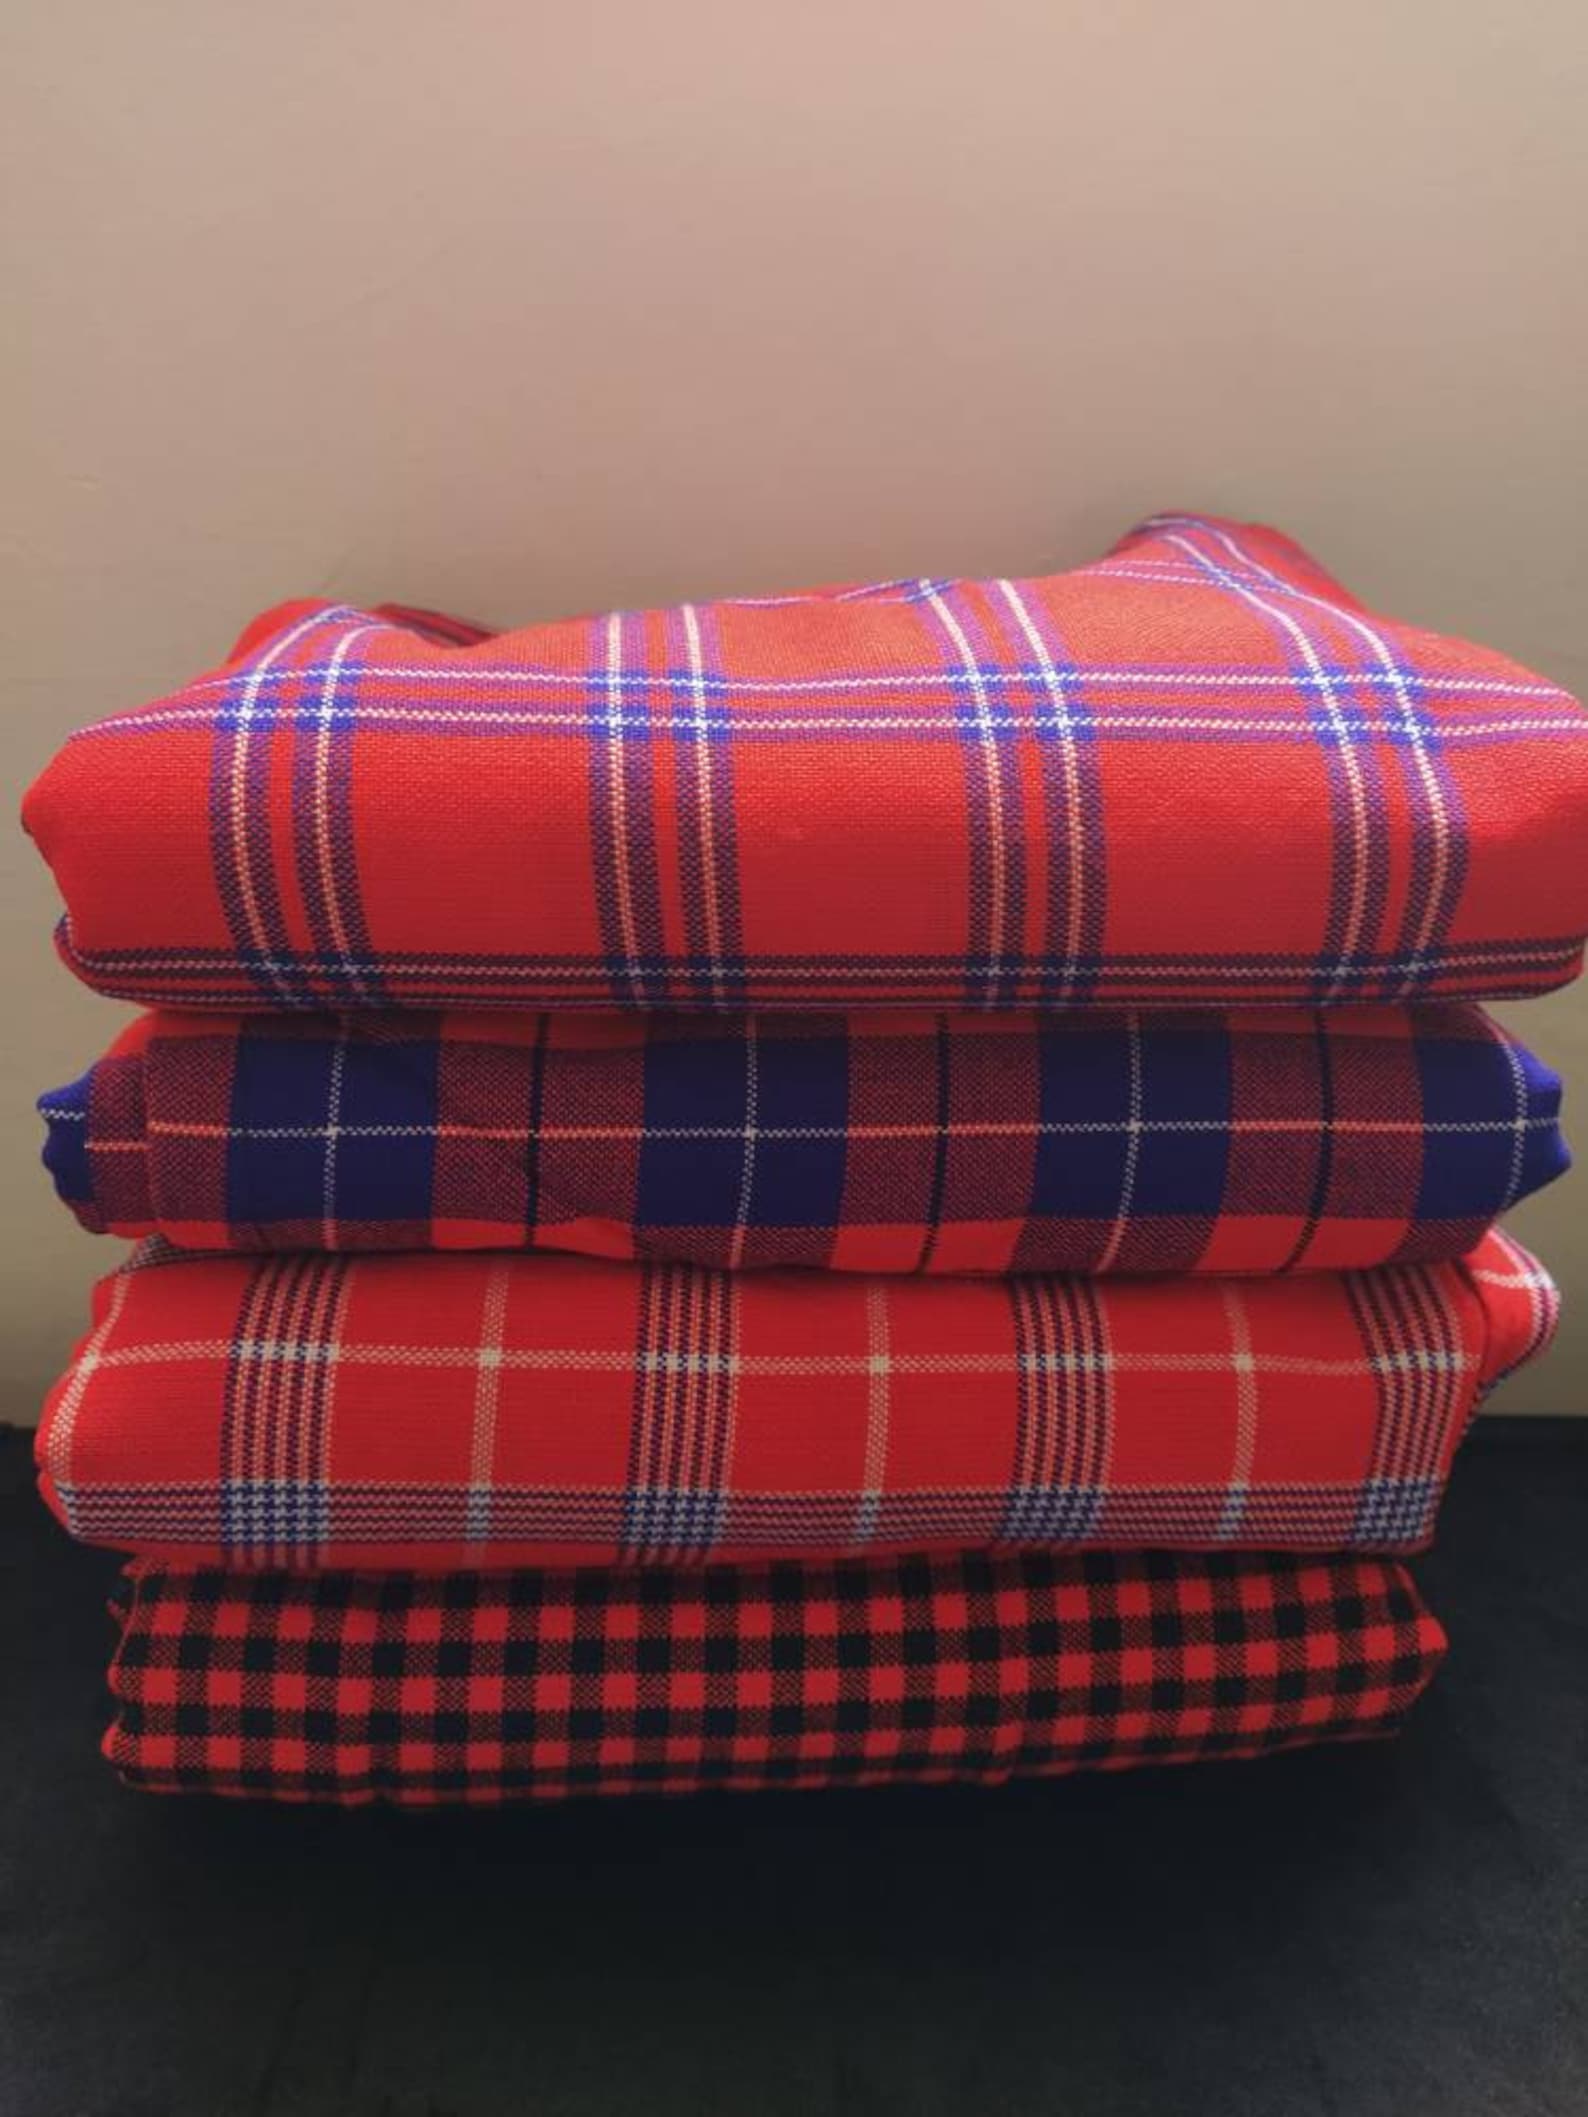 Original maasai shuka masai blanket set of 4 | Etsy